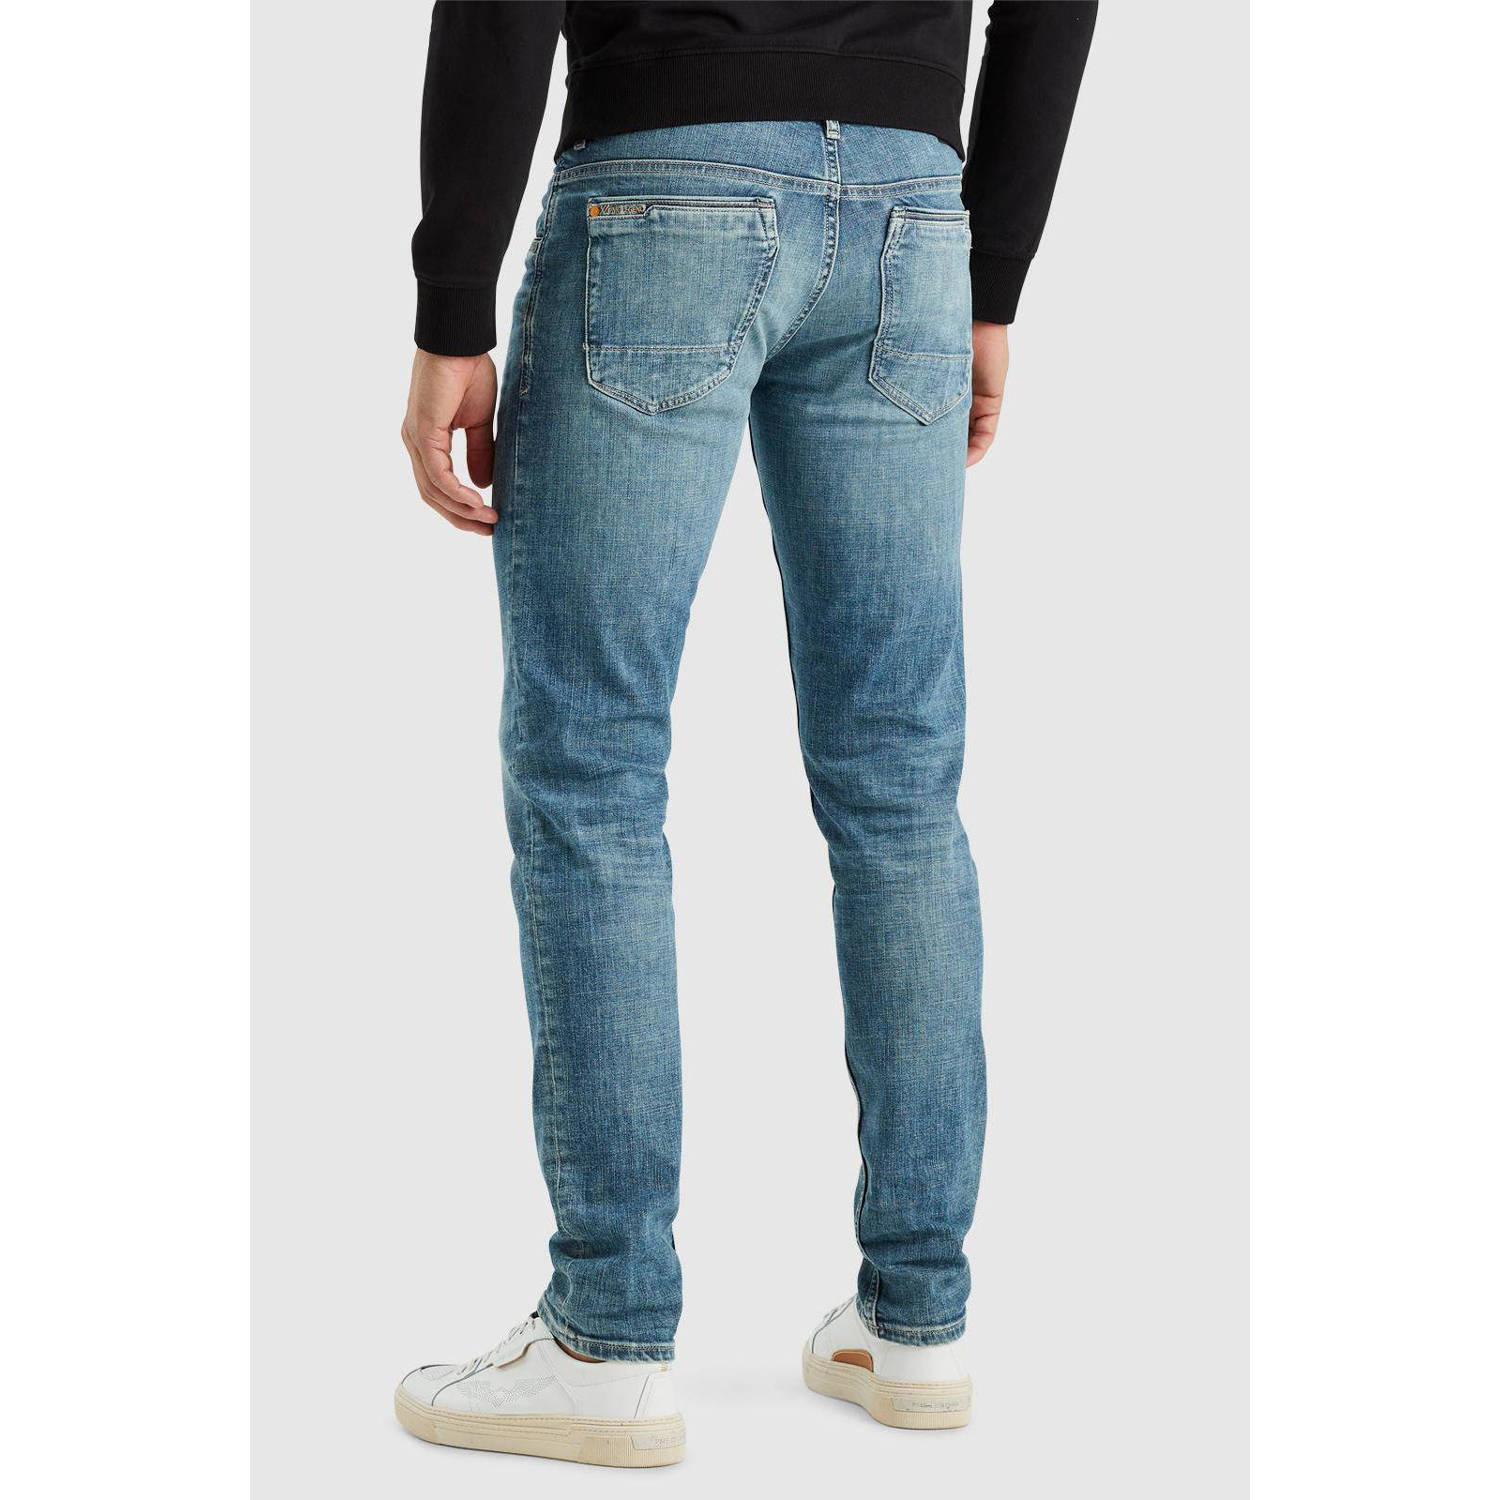 PME Legend slim fit jeans XV DENIM air bright blue